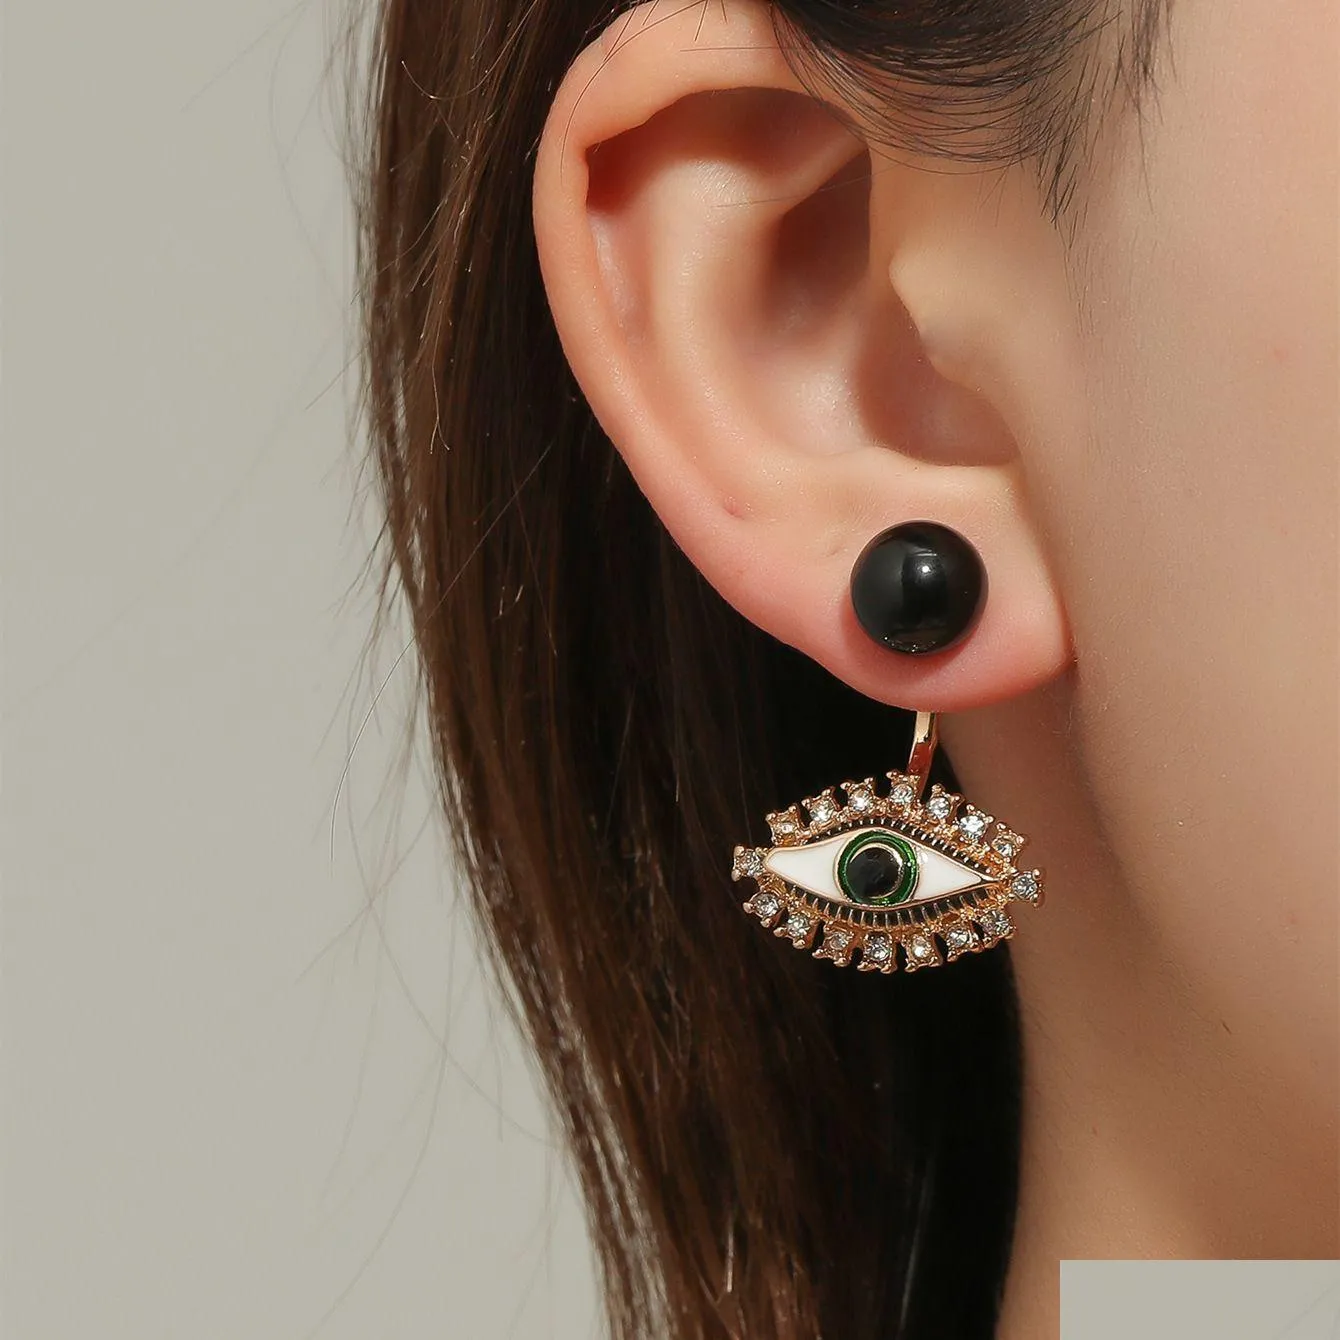 fashion jewelry evil eye stud earrings rhinestone eyes black ball earrings